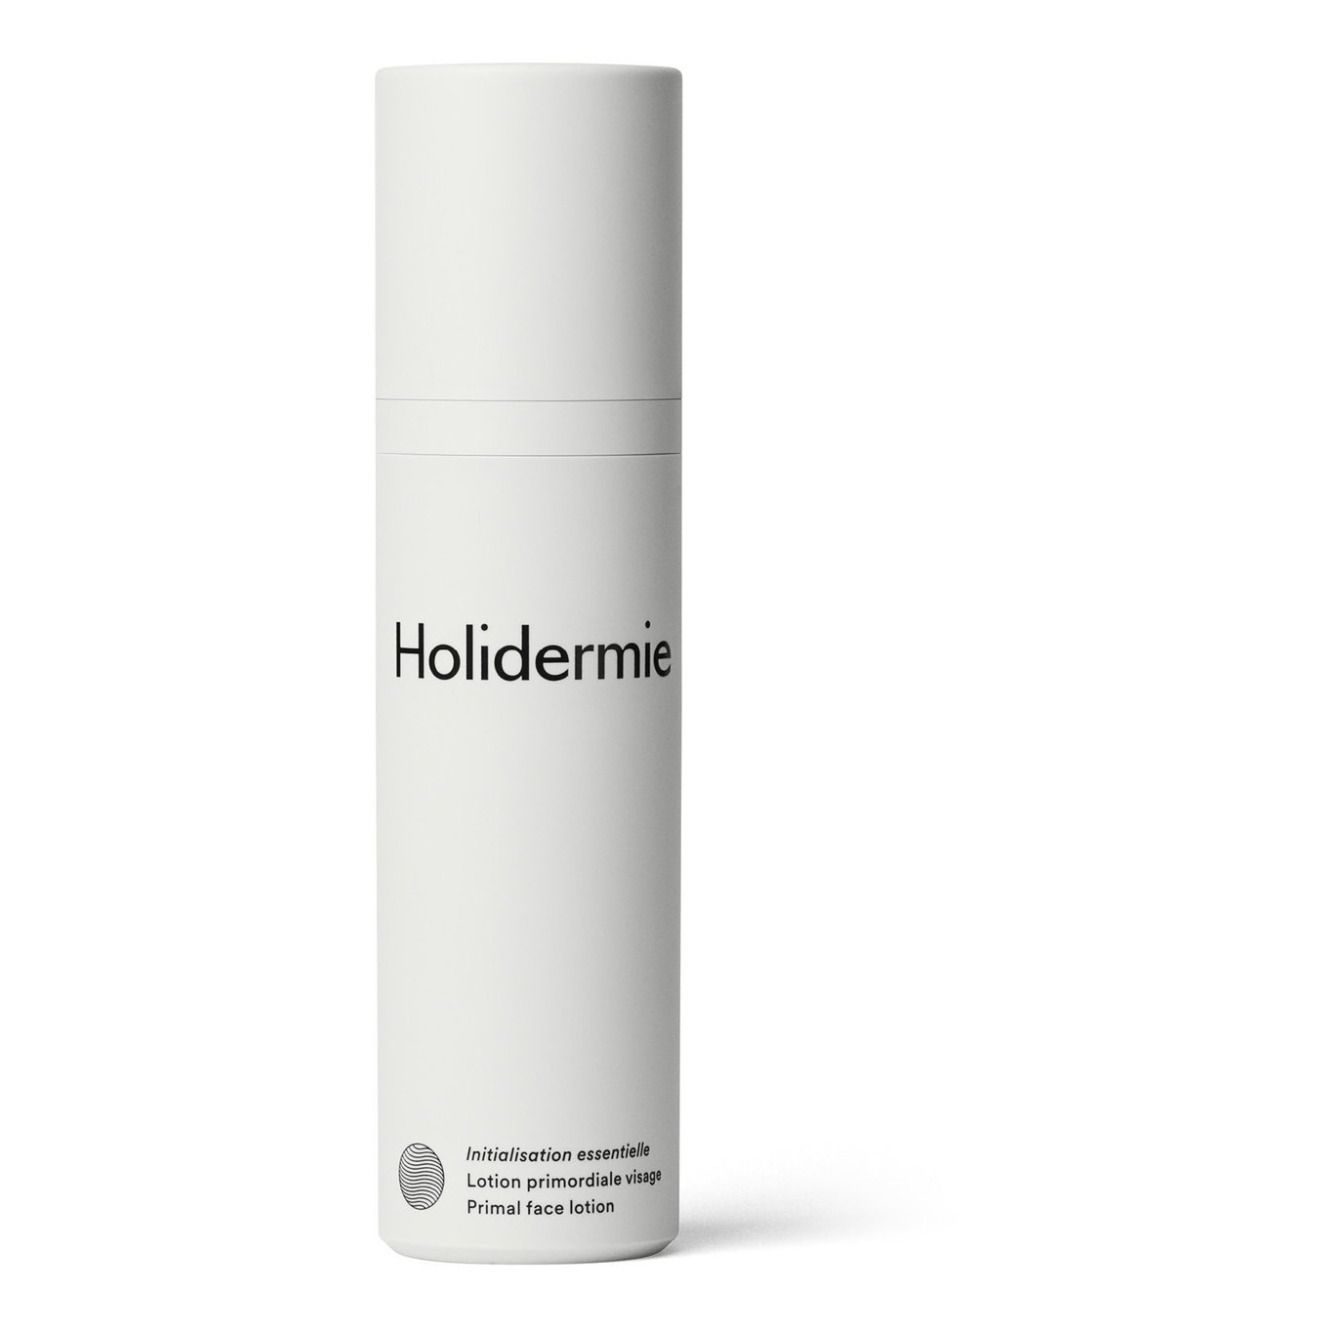 Holidermie - Lotion primordiale visage Initialisation essentielle - 75 ml - Blanc